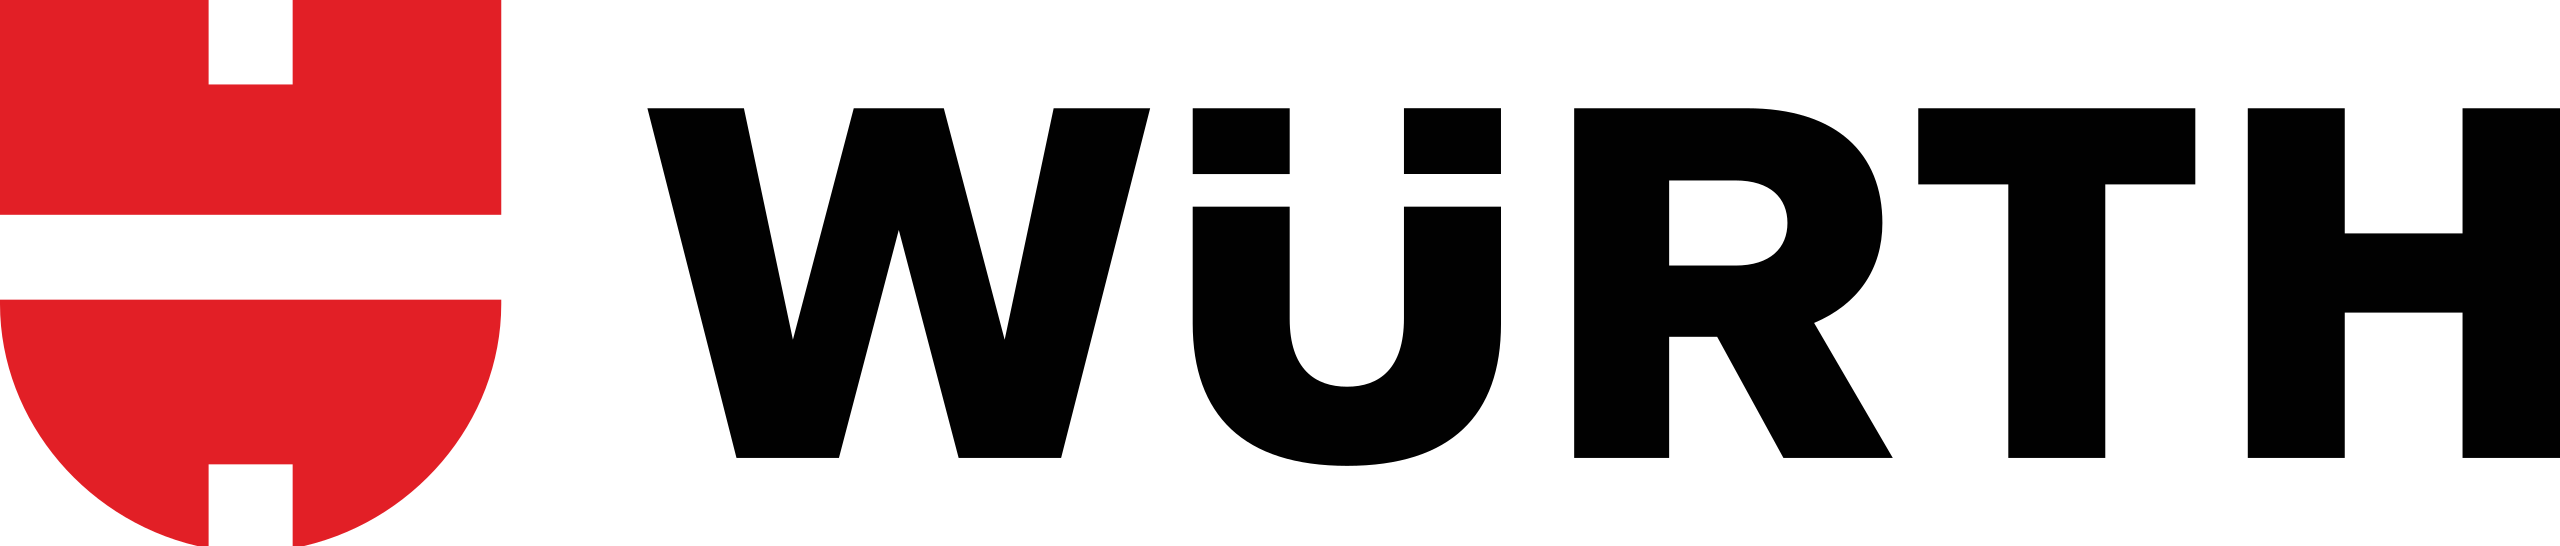 2560px-Würth_logo.svg